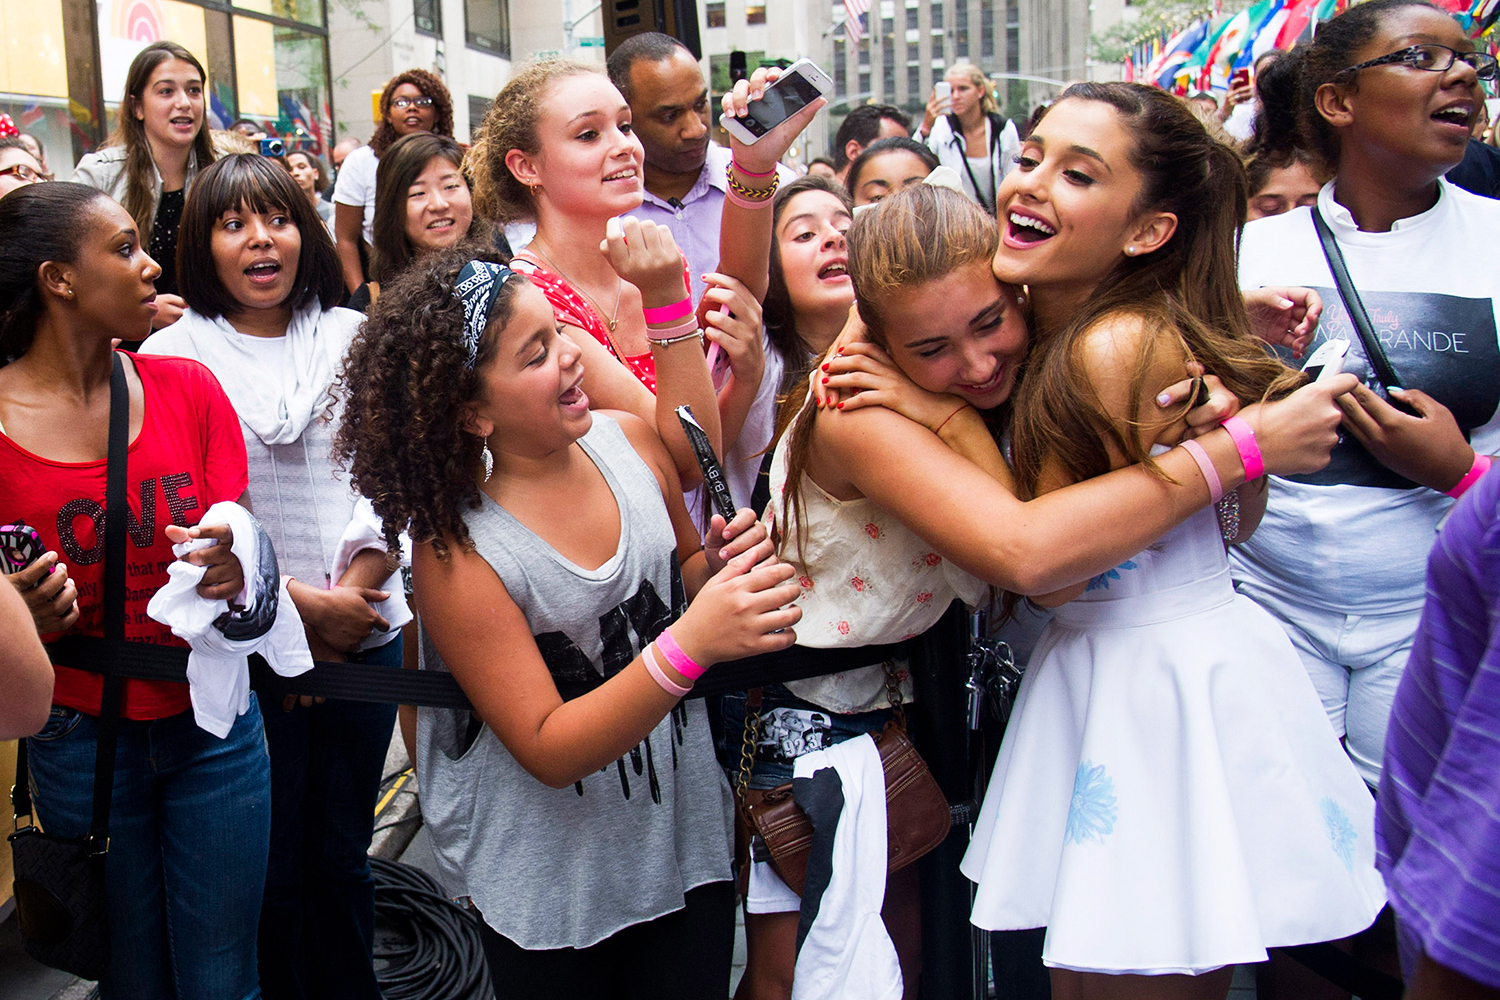 Ariana Grande hugging her fans off stage.